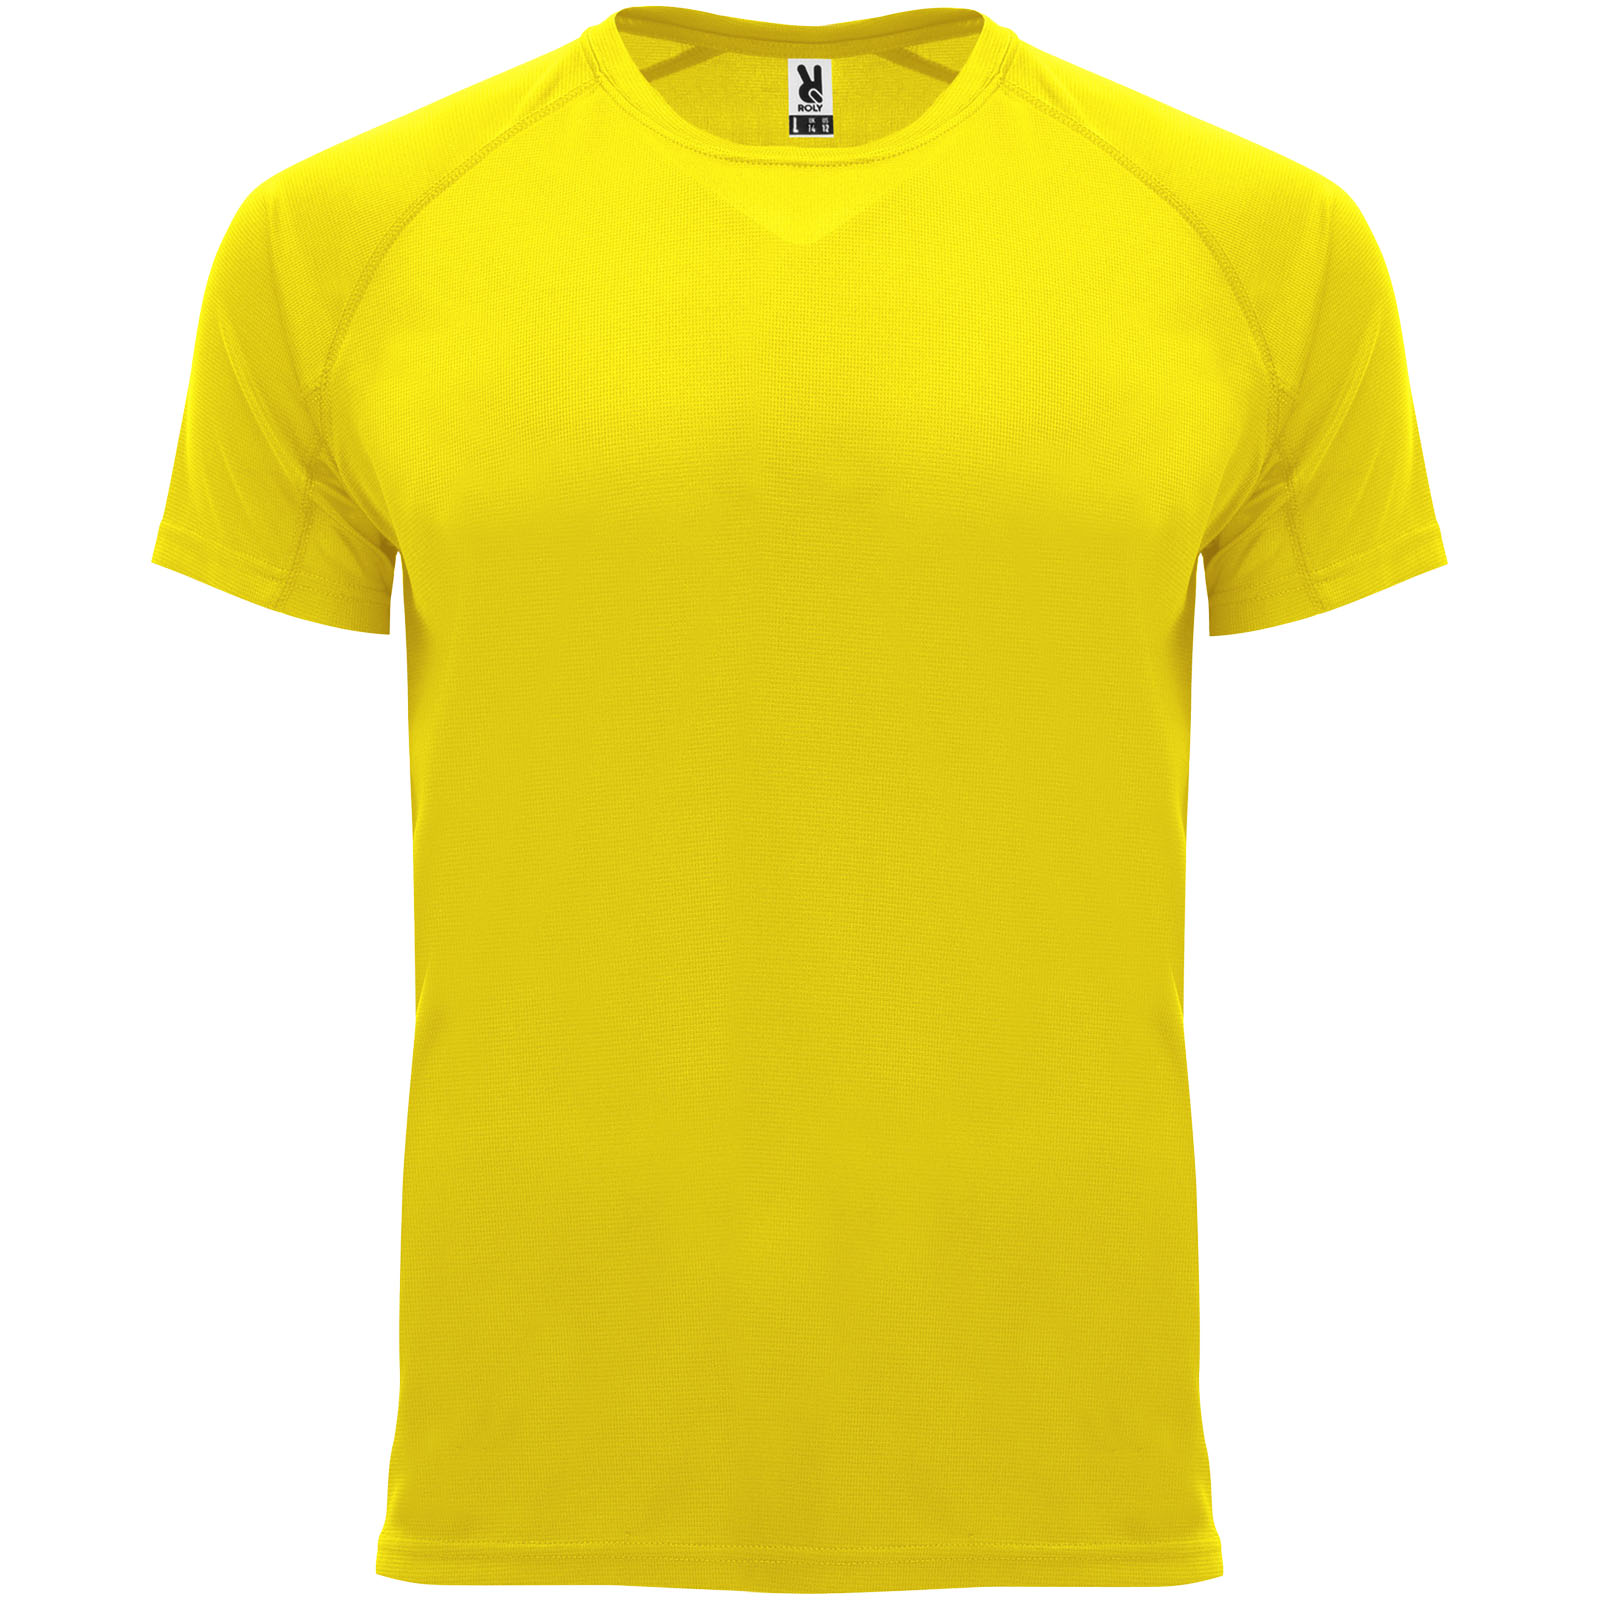 Bahrain short sleeve men's sports t-shirt - Aylesford